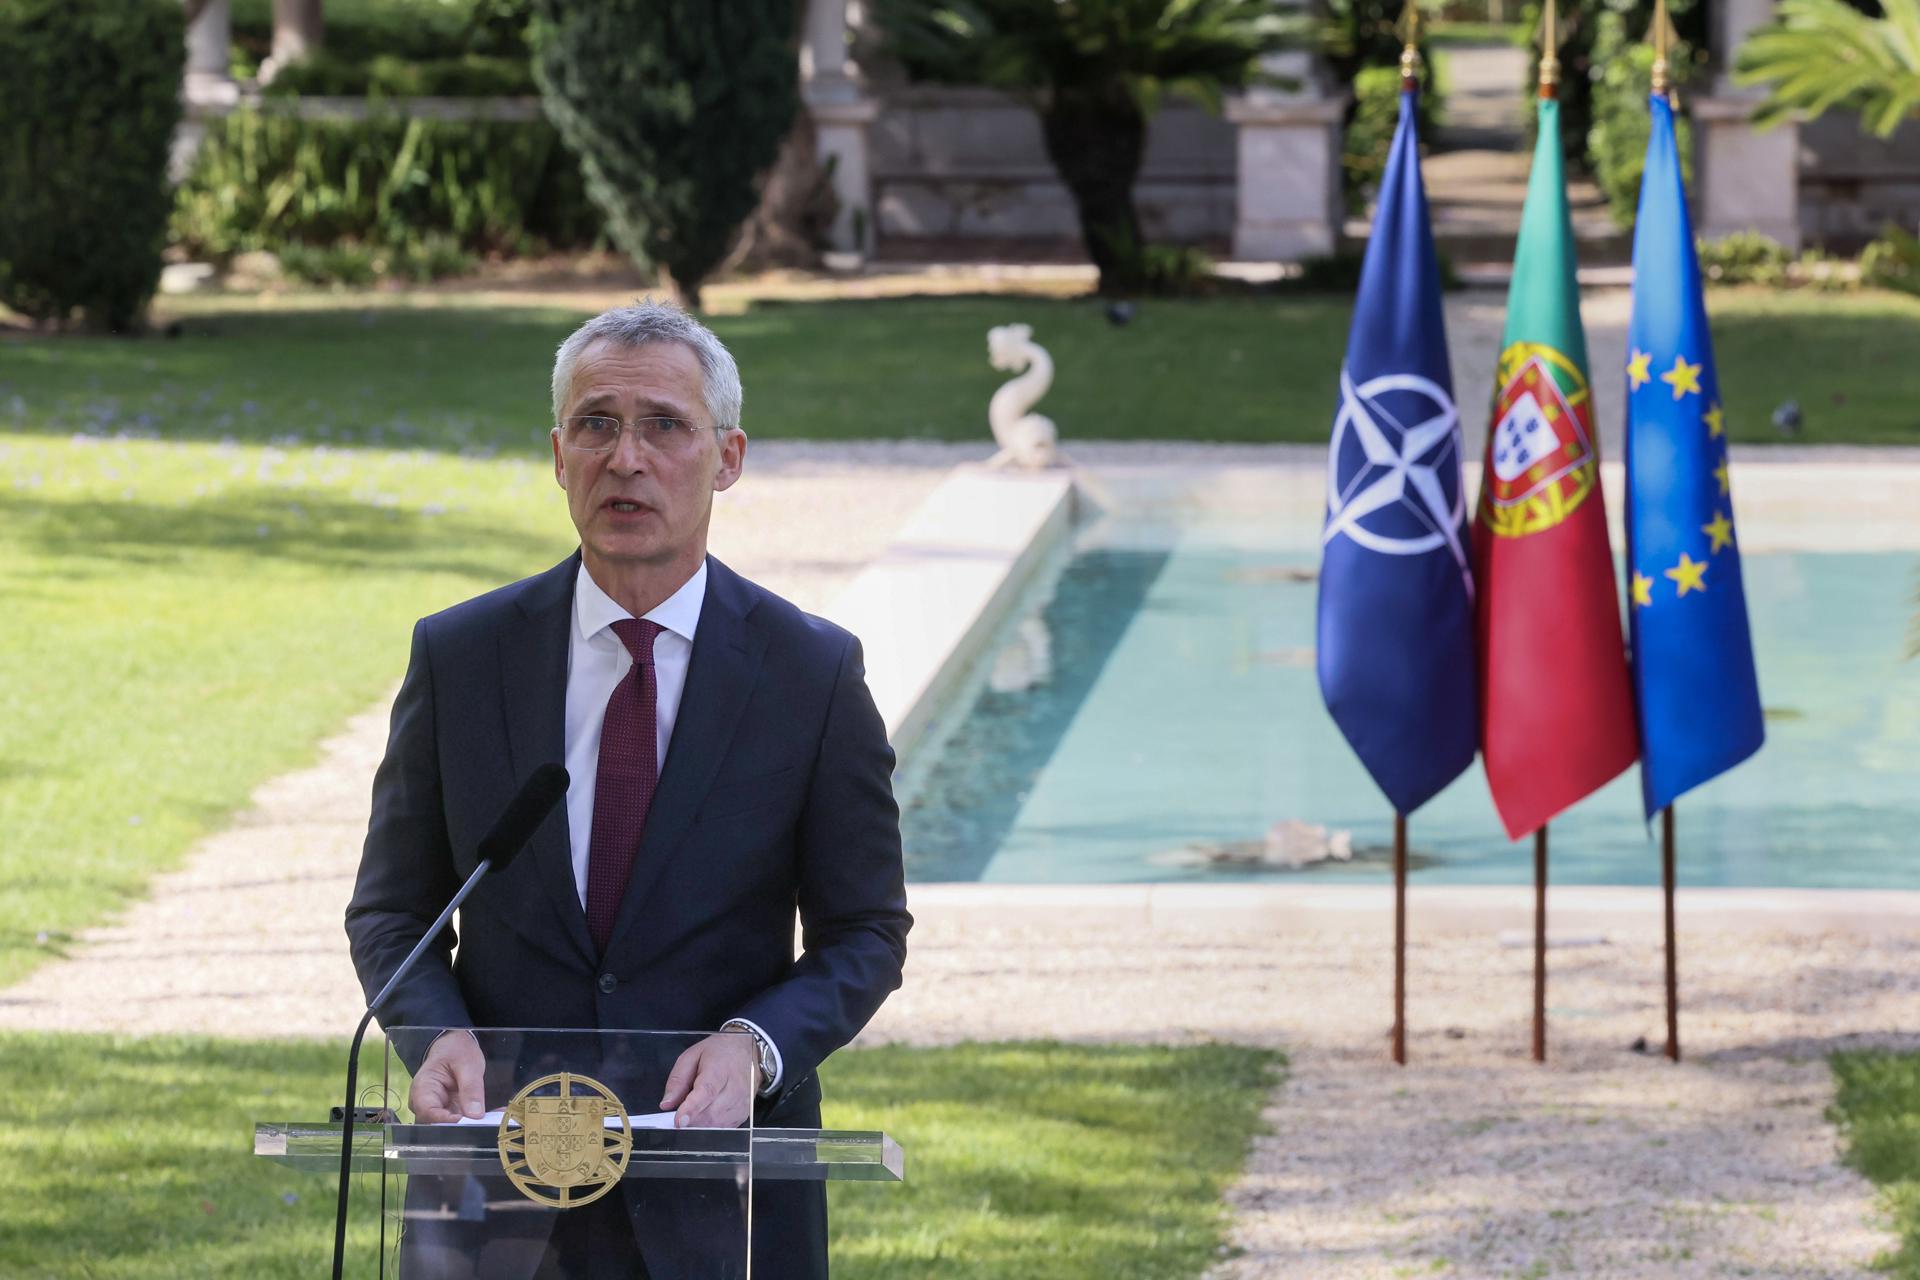 A file picture shows NATO Secretary General Jens Stoltenberg in Lisbon, Portugal. EFE/EPA/FILE/MANUEL DE ALMEIDA